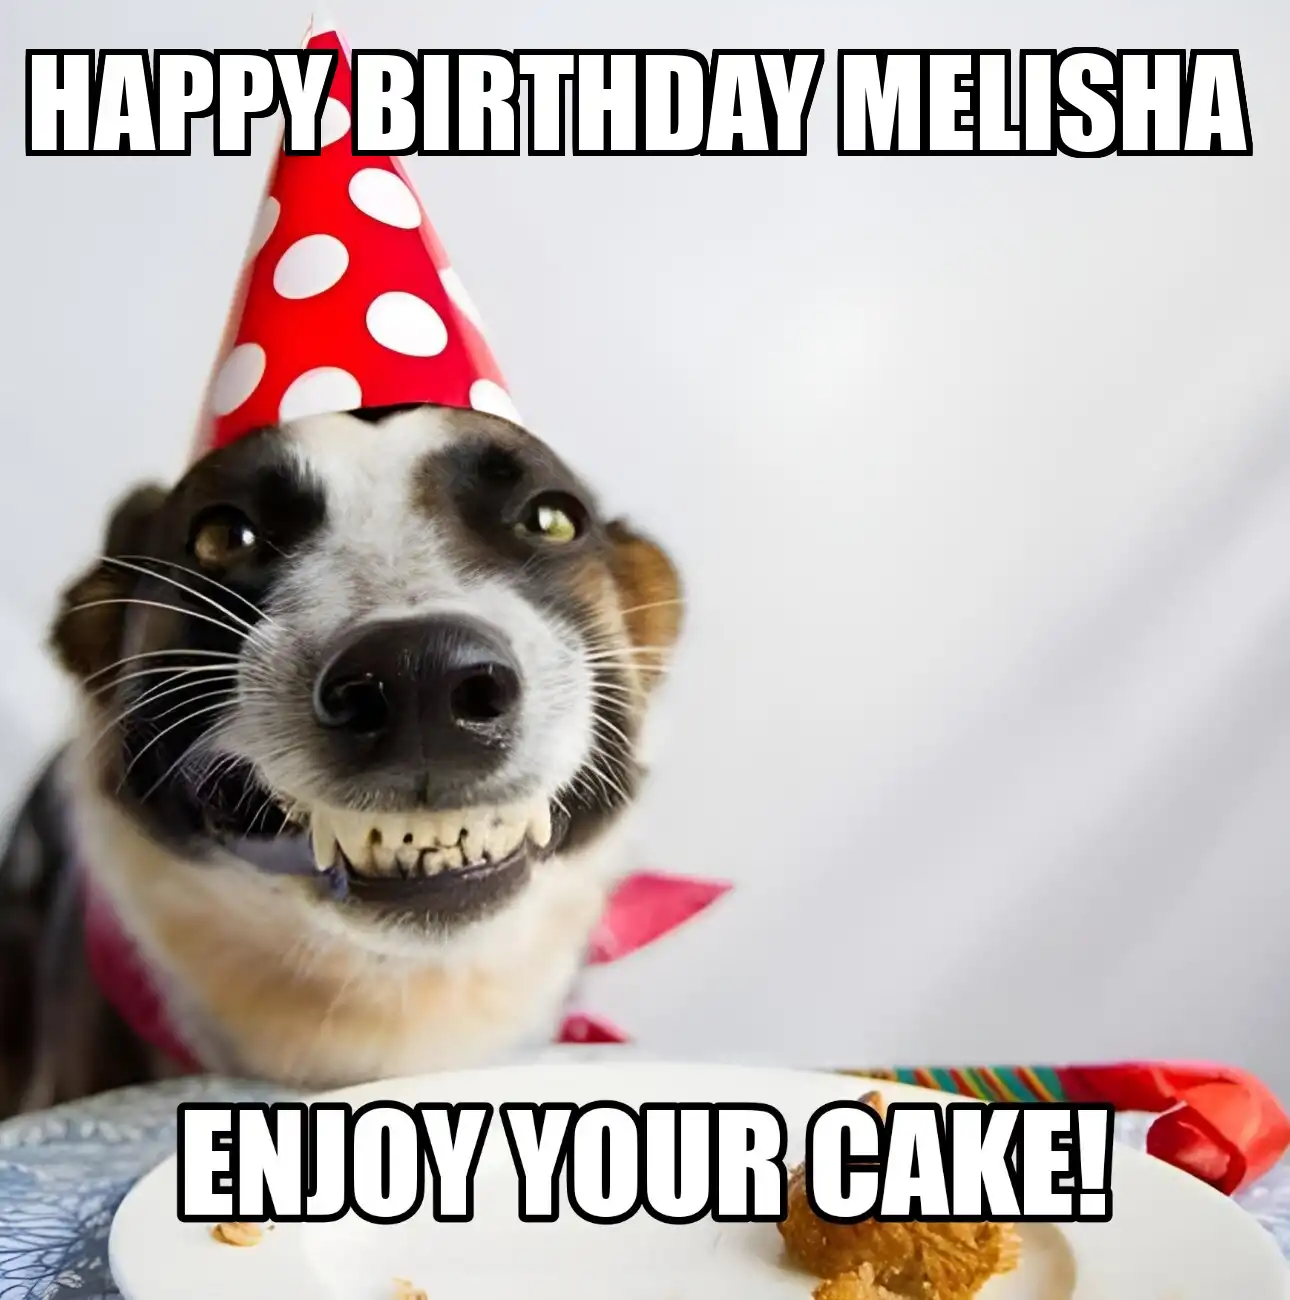 Happy Birthday Melisha Enjoy Your Cake Dog Meme